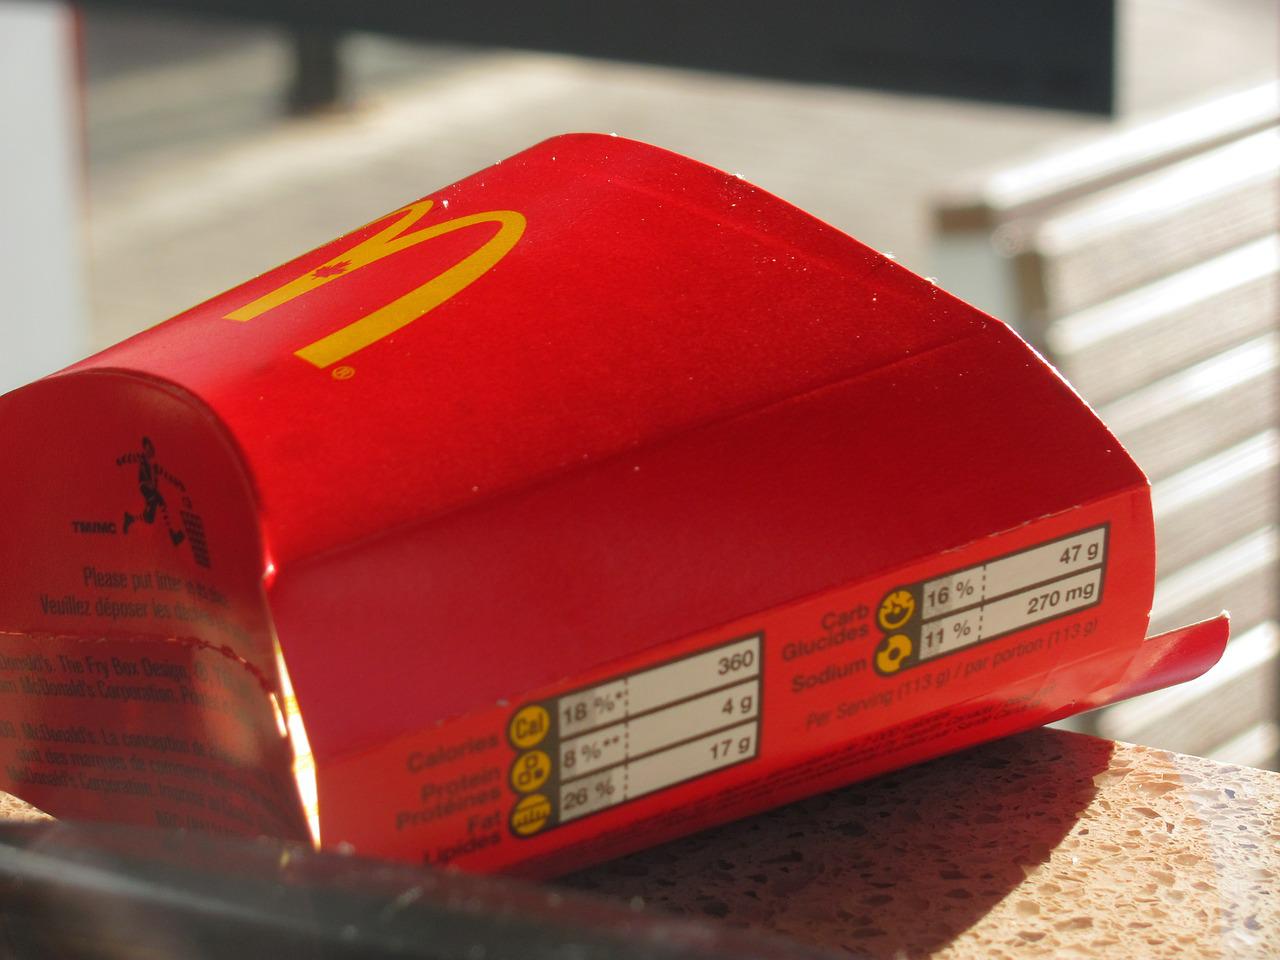 Сотрудника McDonald’s застрелили из-за холодной картошки фри